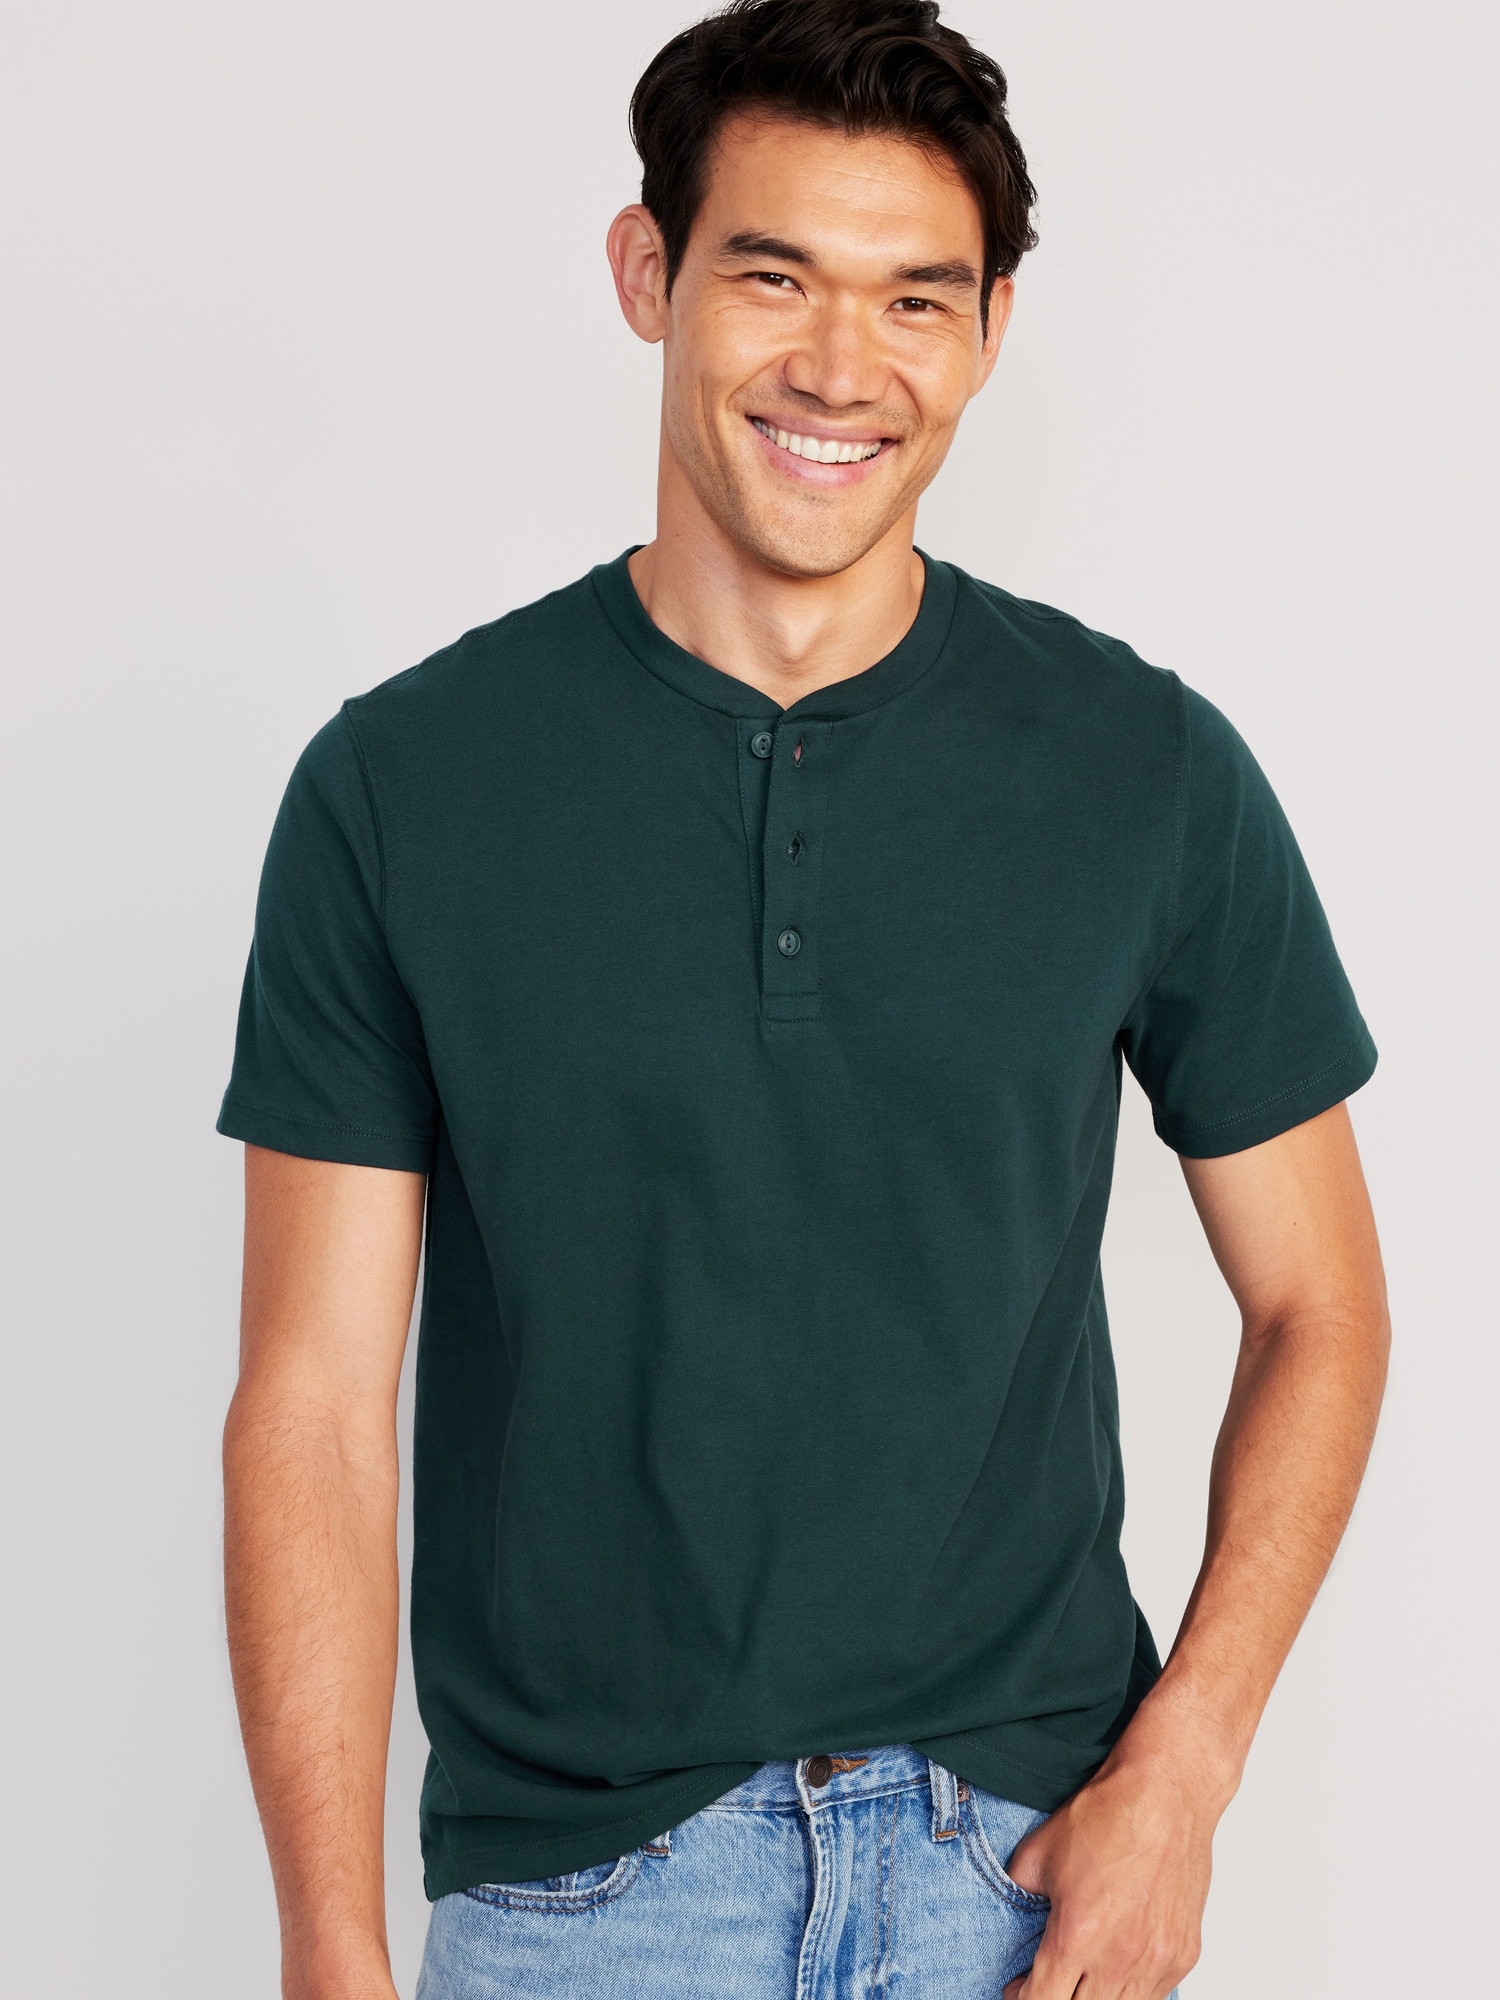 Soft-Washed Short-Sleeve Henley T-Shirt for Men | Old Navy